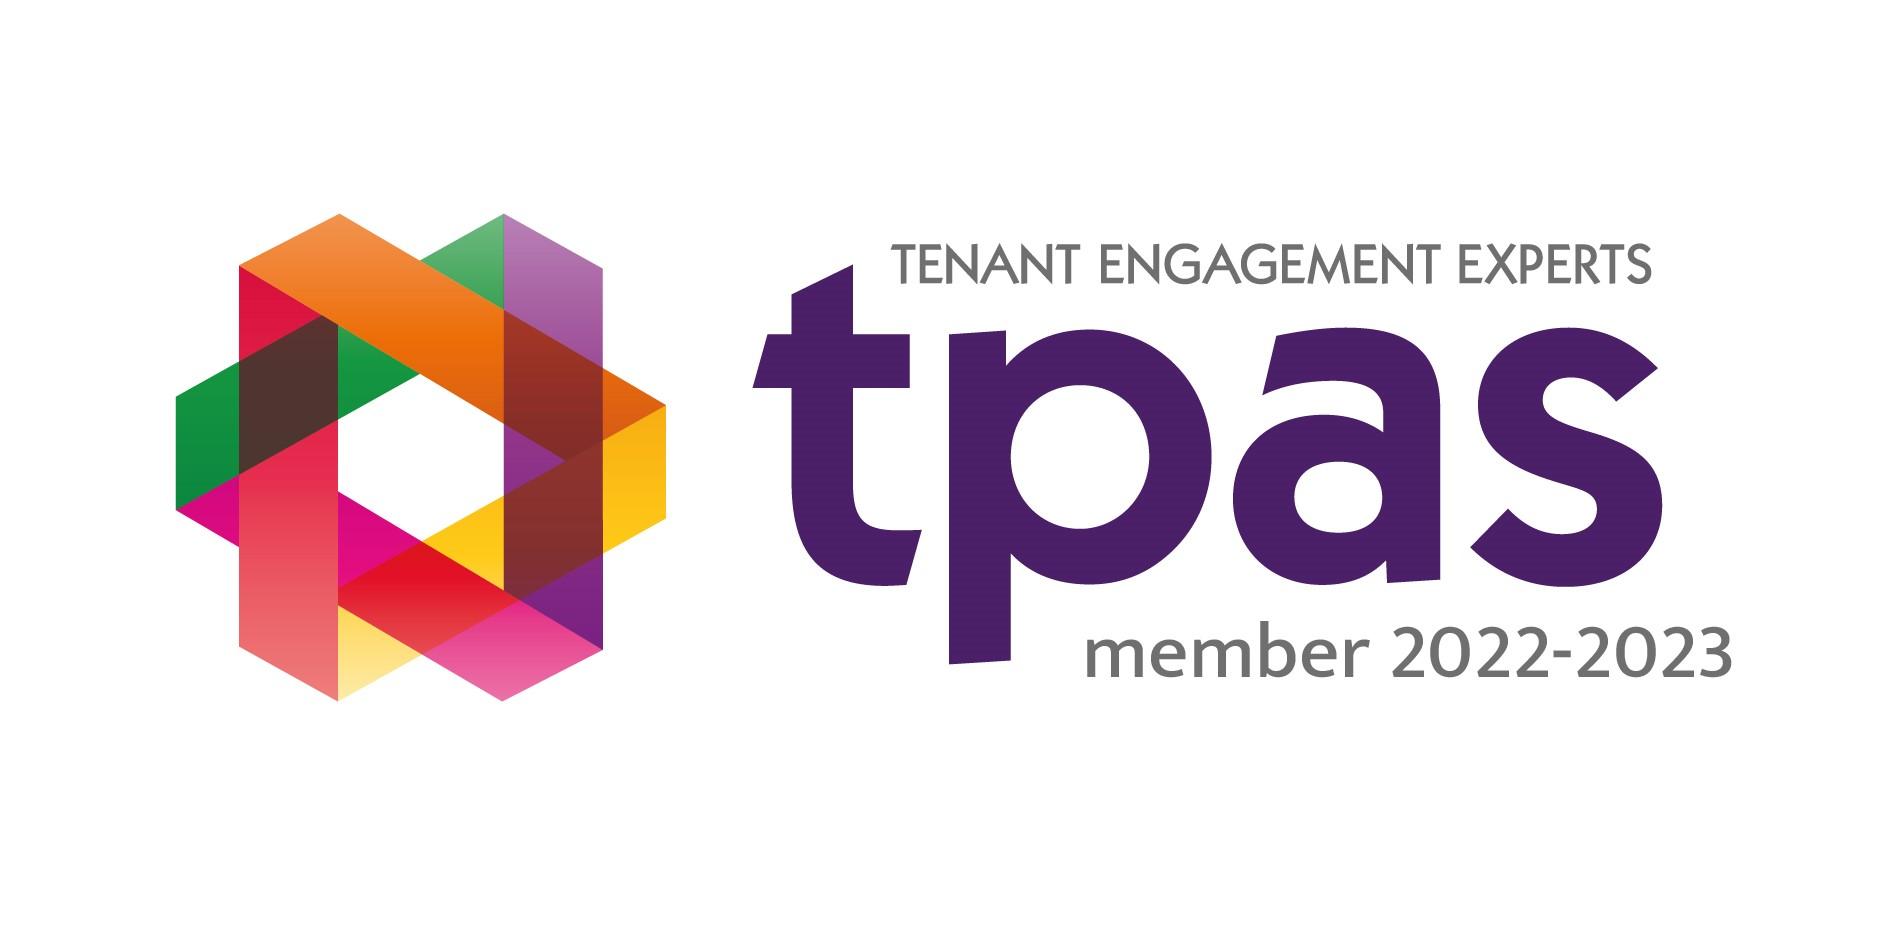 TPAS Tenant Engagement Experts logo 2022-2023